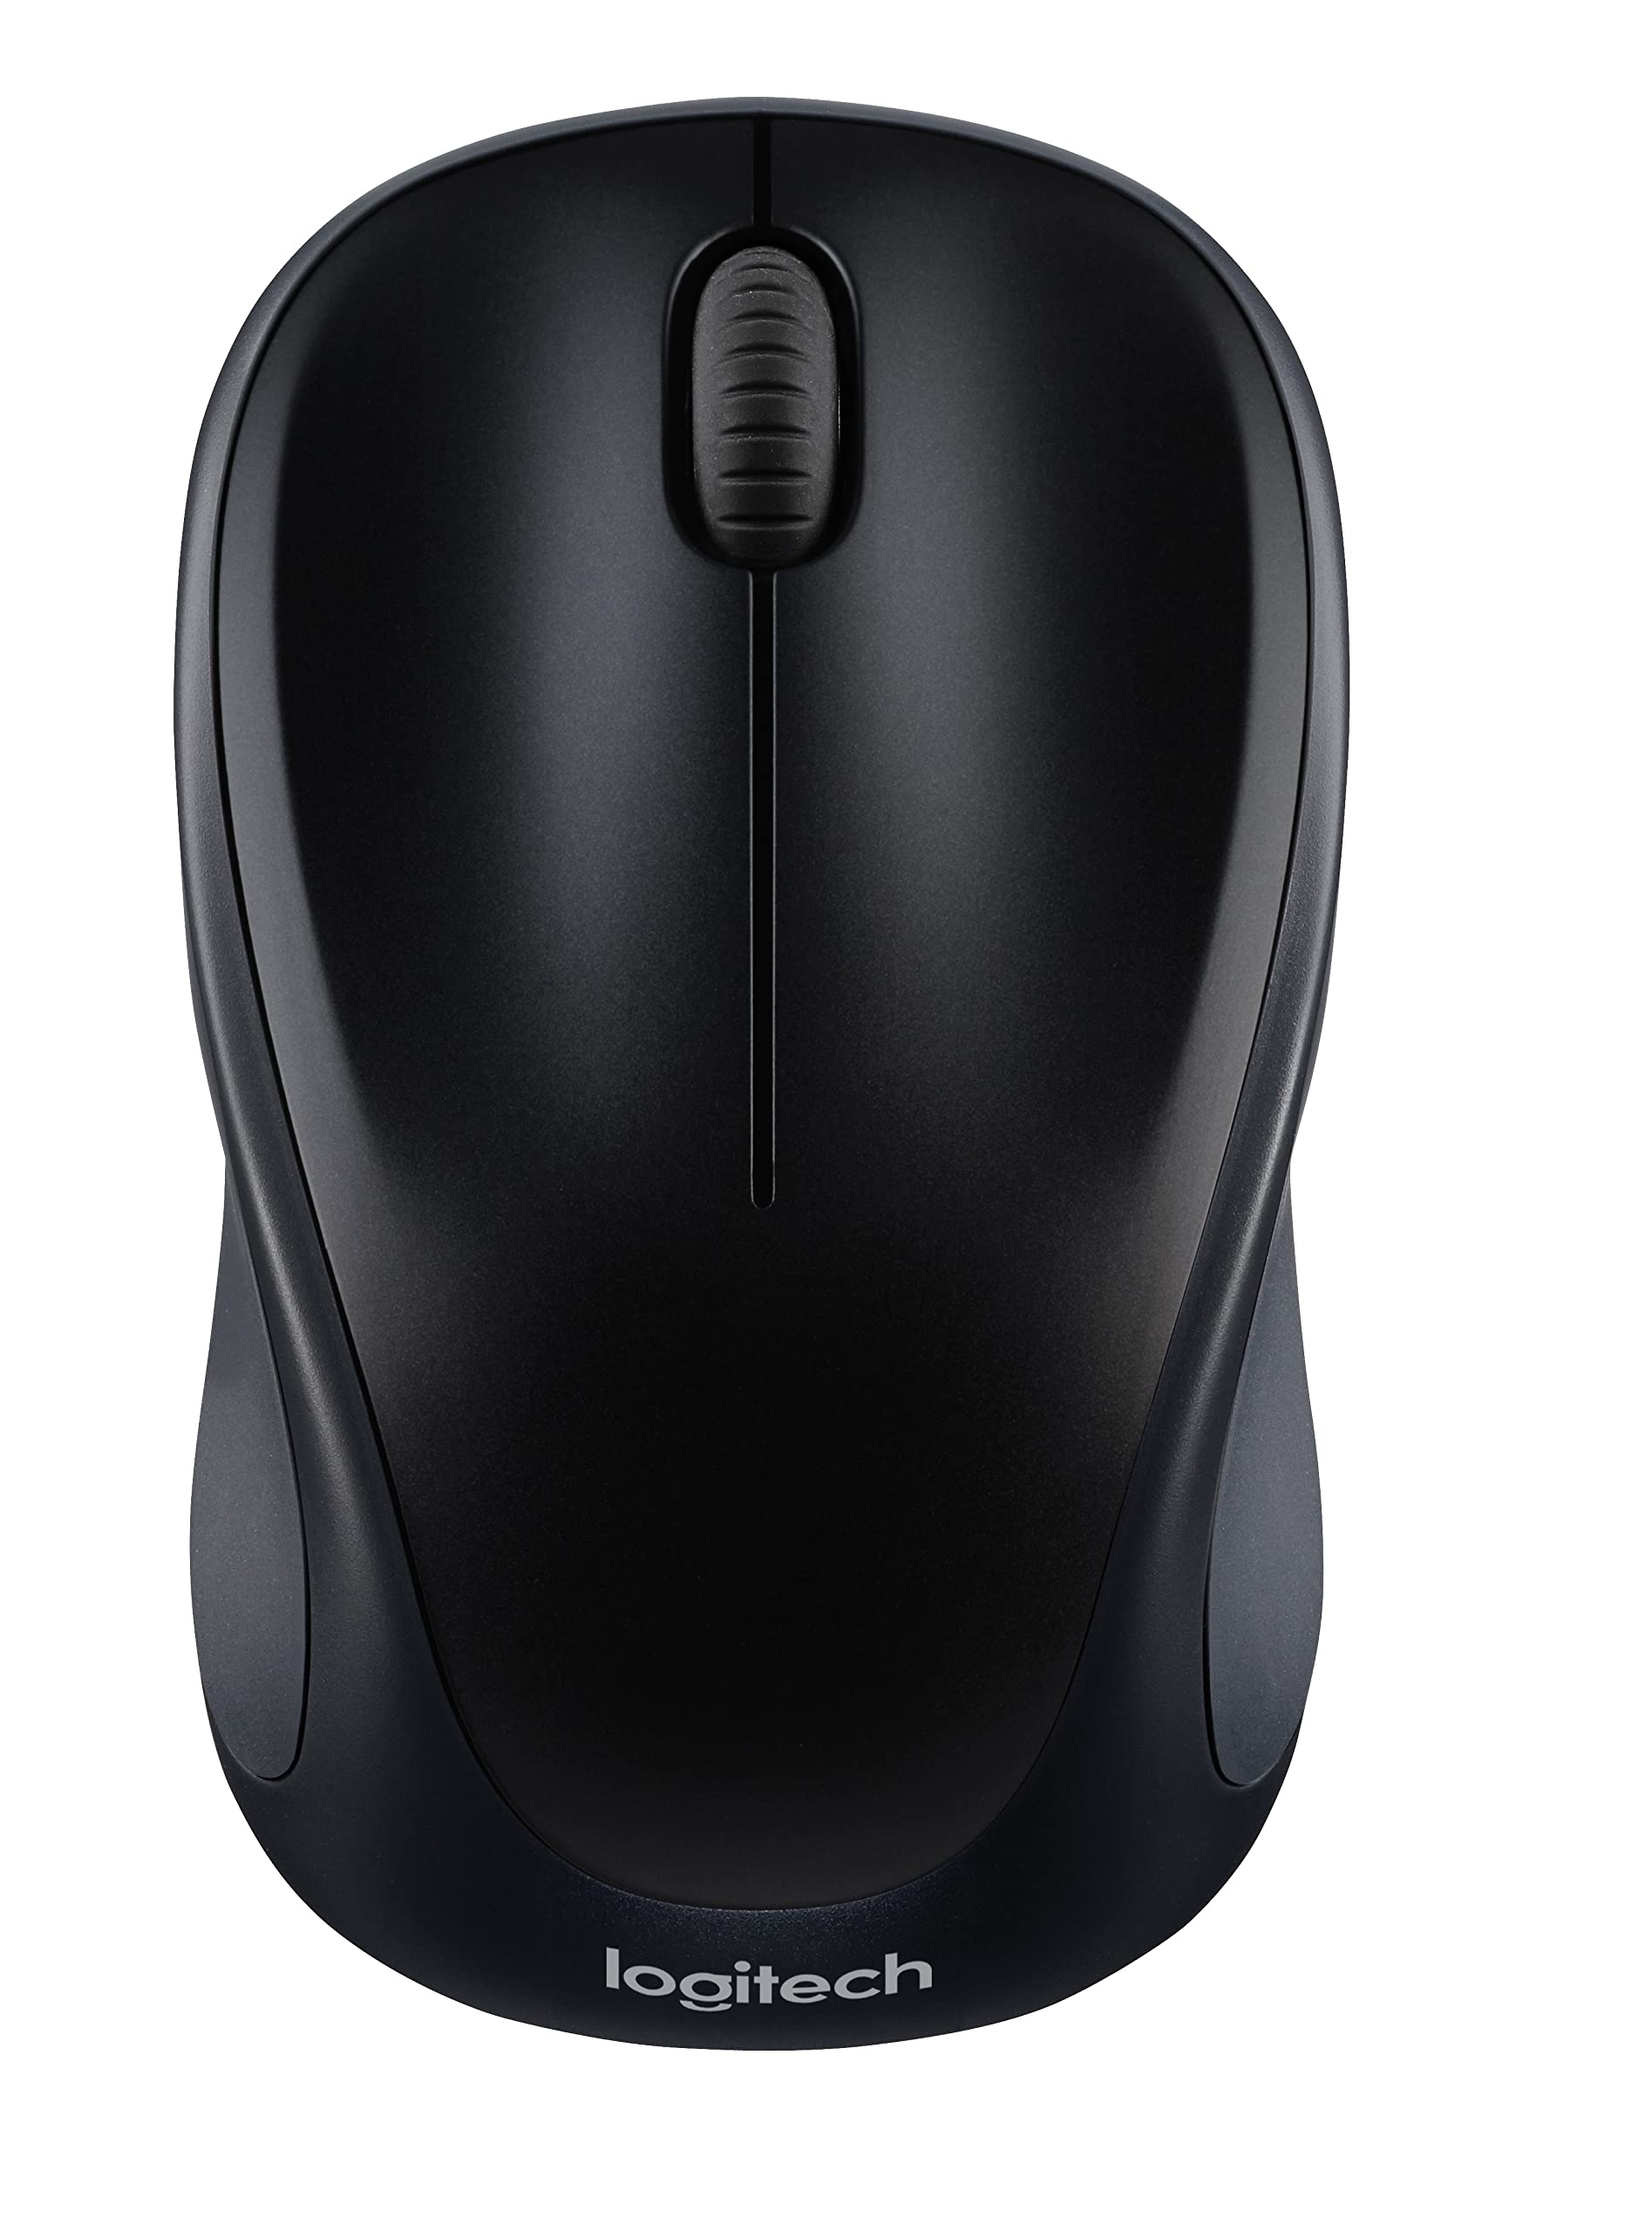 Logitech M317 Wireless Mouse w/ USB Receiver (Black/Blue/Red) $9.99 + FS w/ Prime